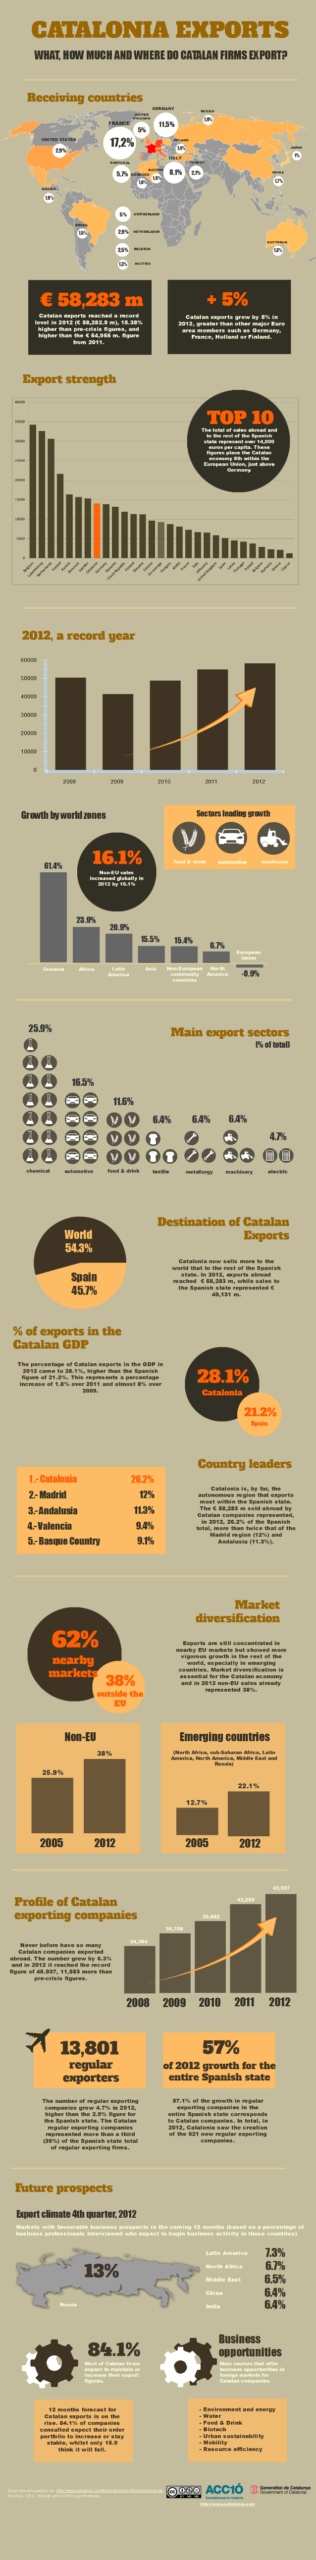 Catalonia Exports infographic